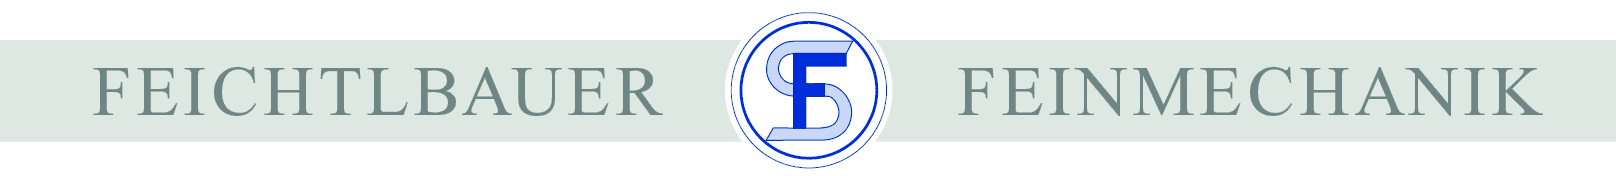 Feichtlbauer Feinmechanik GmbH & Co. KG Logo